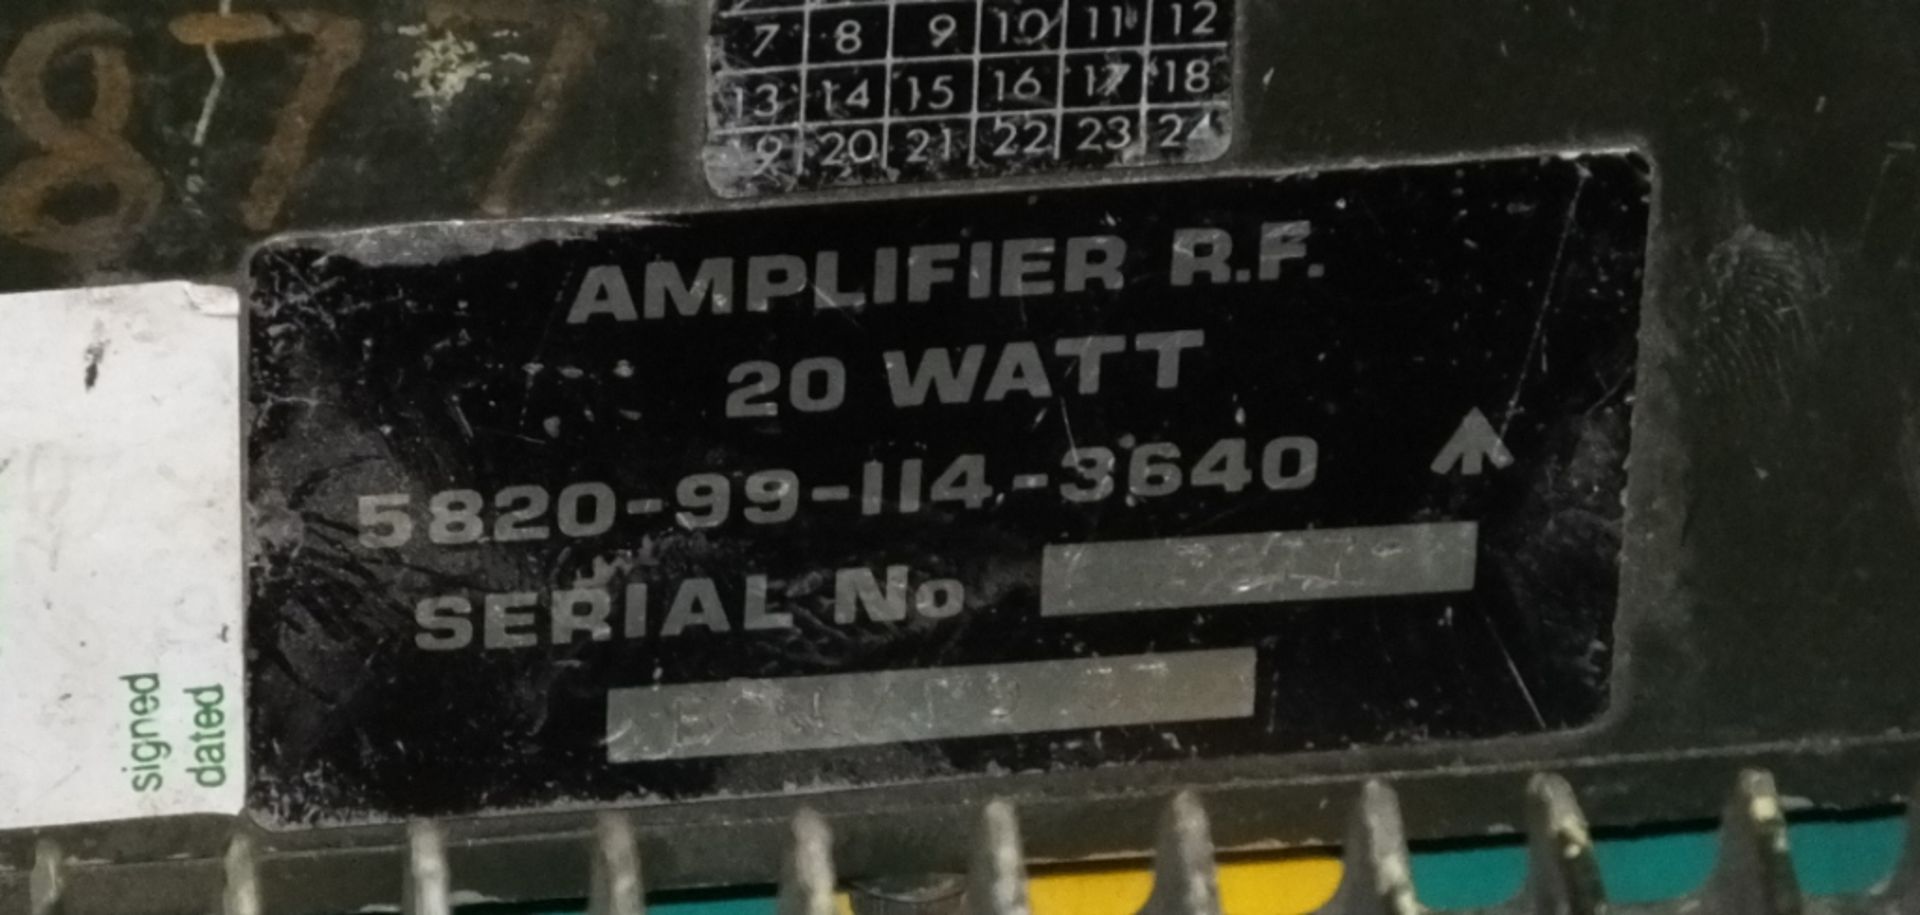 2x RF Selective units 4 watt, 2x RF Amplifiers 20 watt - NSN 5820-99-114-3640 - Image 2 of 3